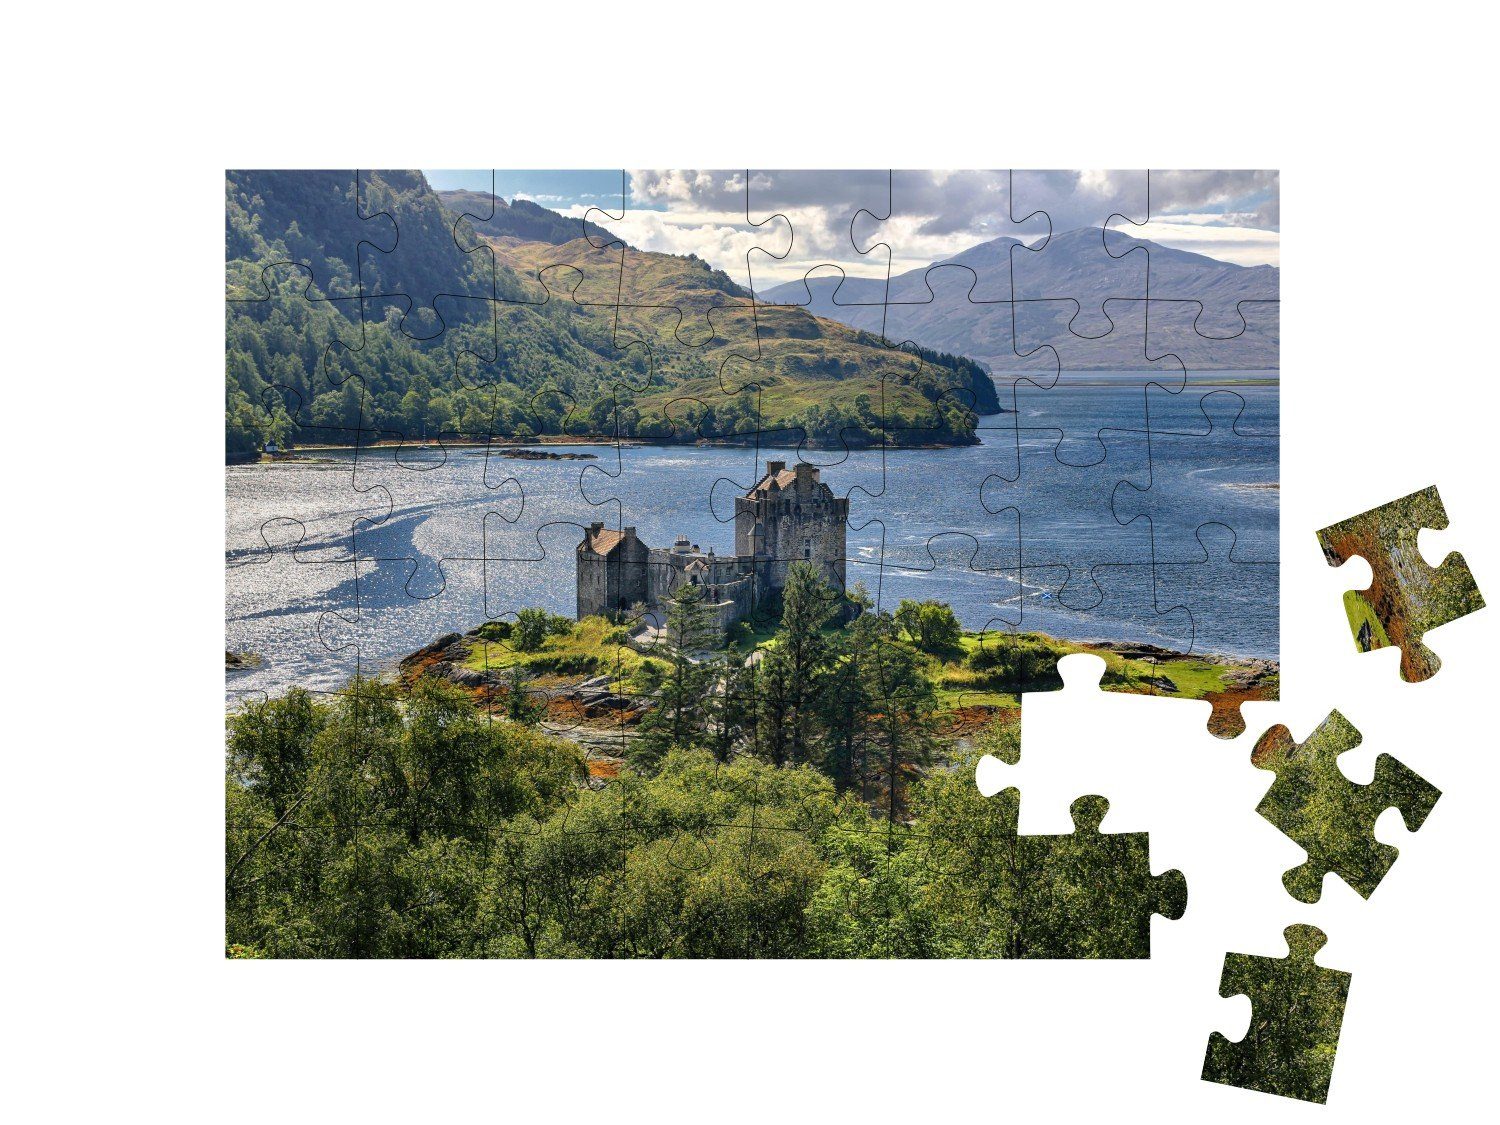 48 Eilean Puzzleteile, puzzleYOU Natur, Puzzle Festung puzzleYOU-Kollektionen Highlands, Schottland, Schottland Donan Castle,